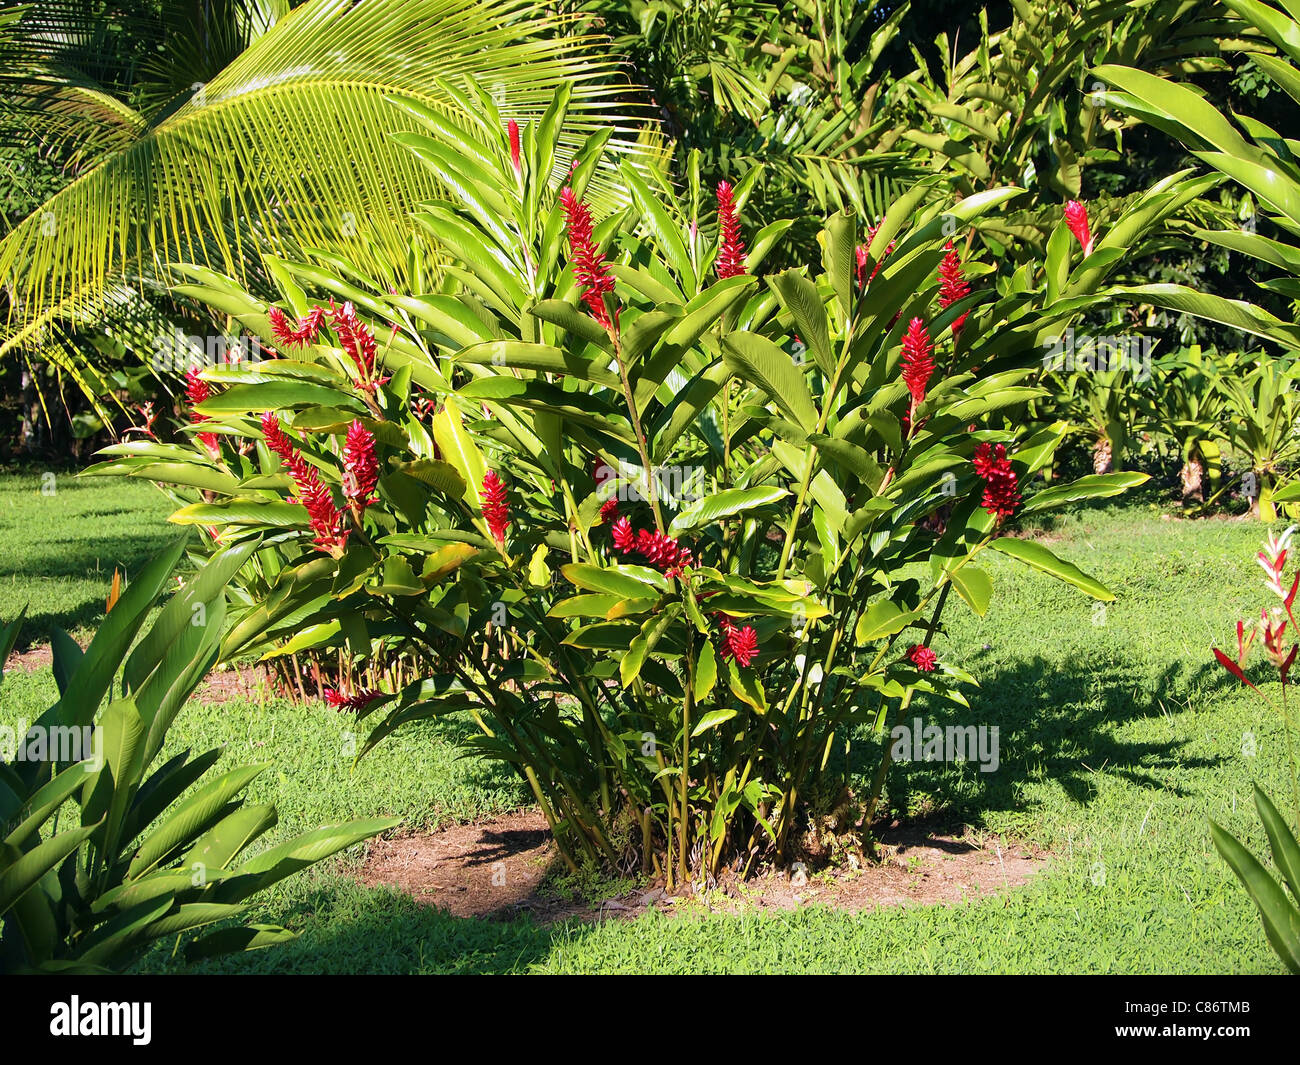 Planta de jengibre tropical fotografías e imágenes de alta resolución -  Alamy